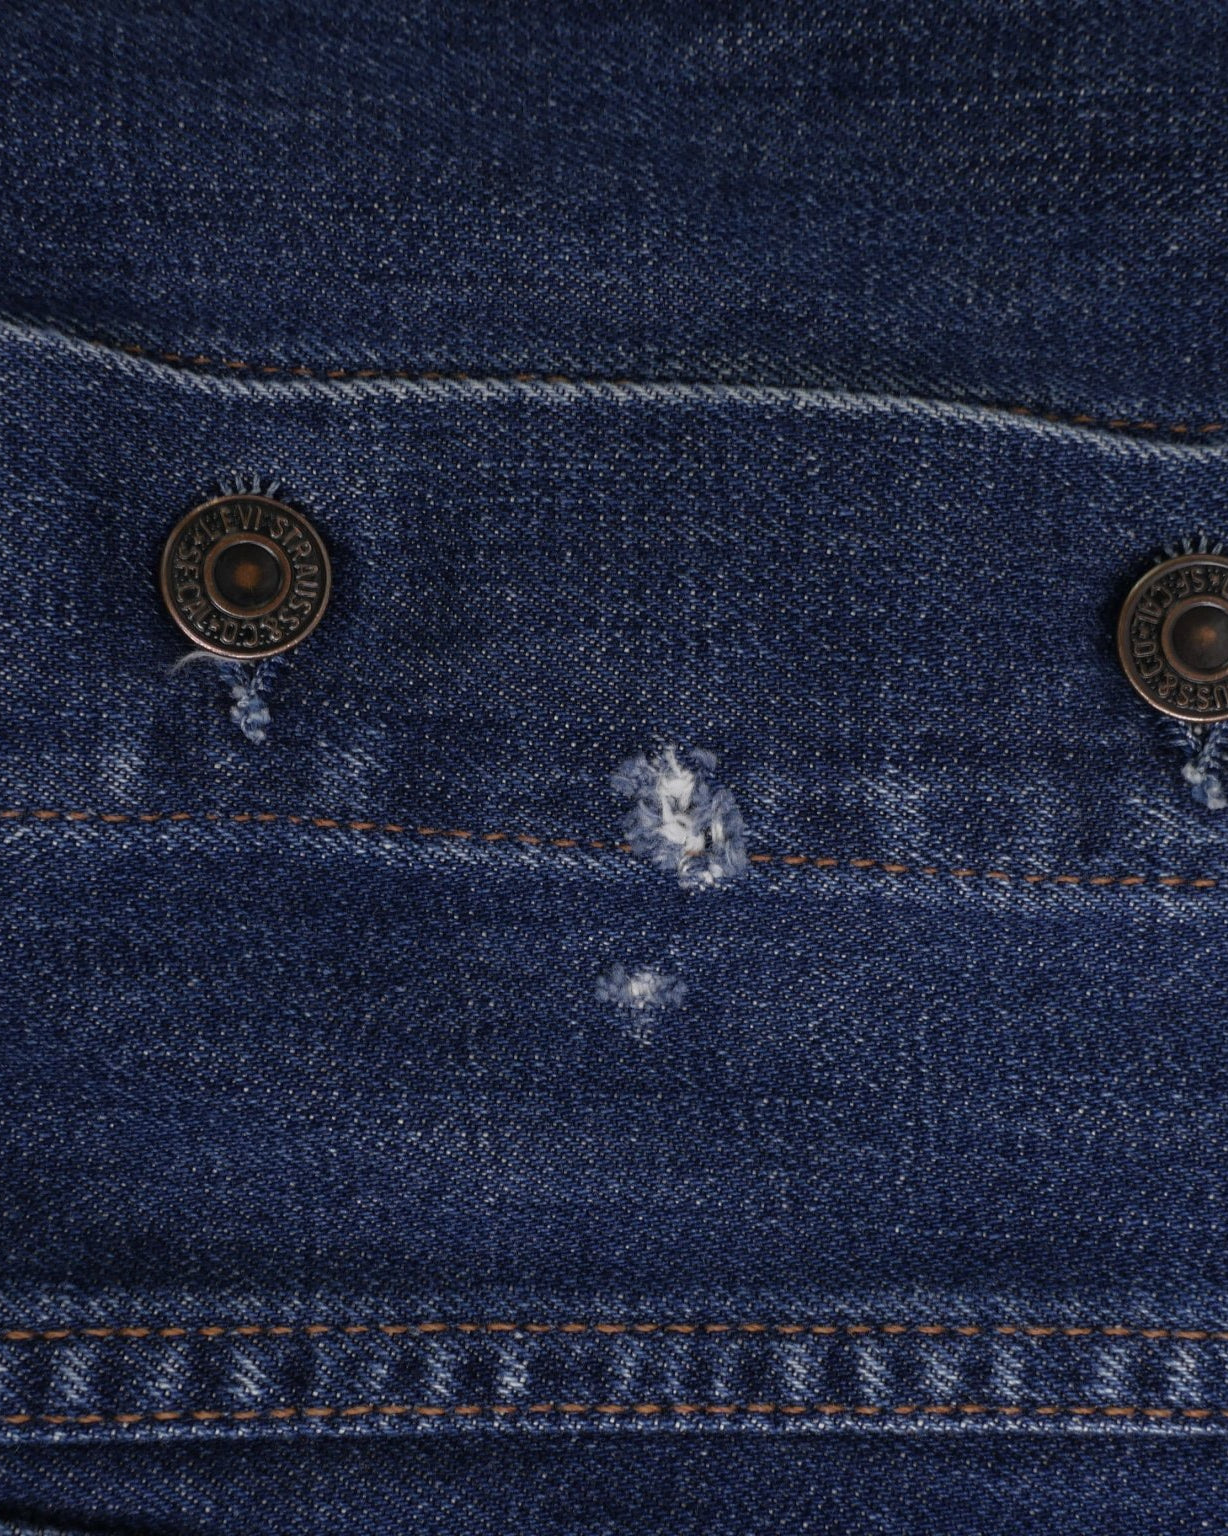 Levi's dark washed Jeans Jacket - Peeces